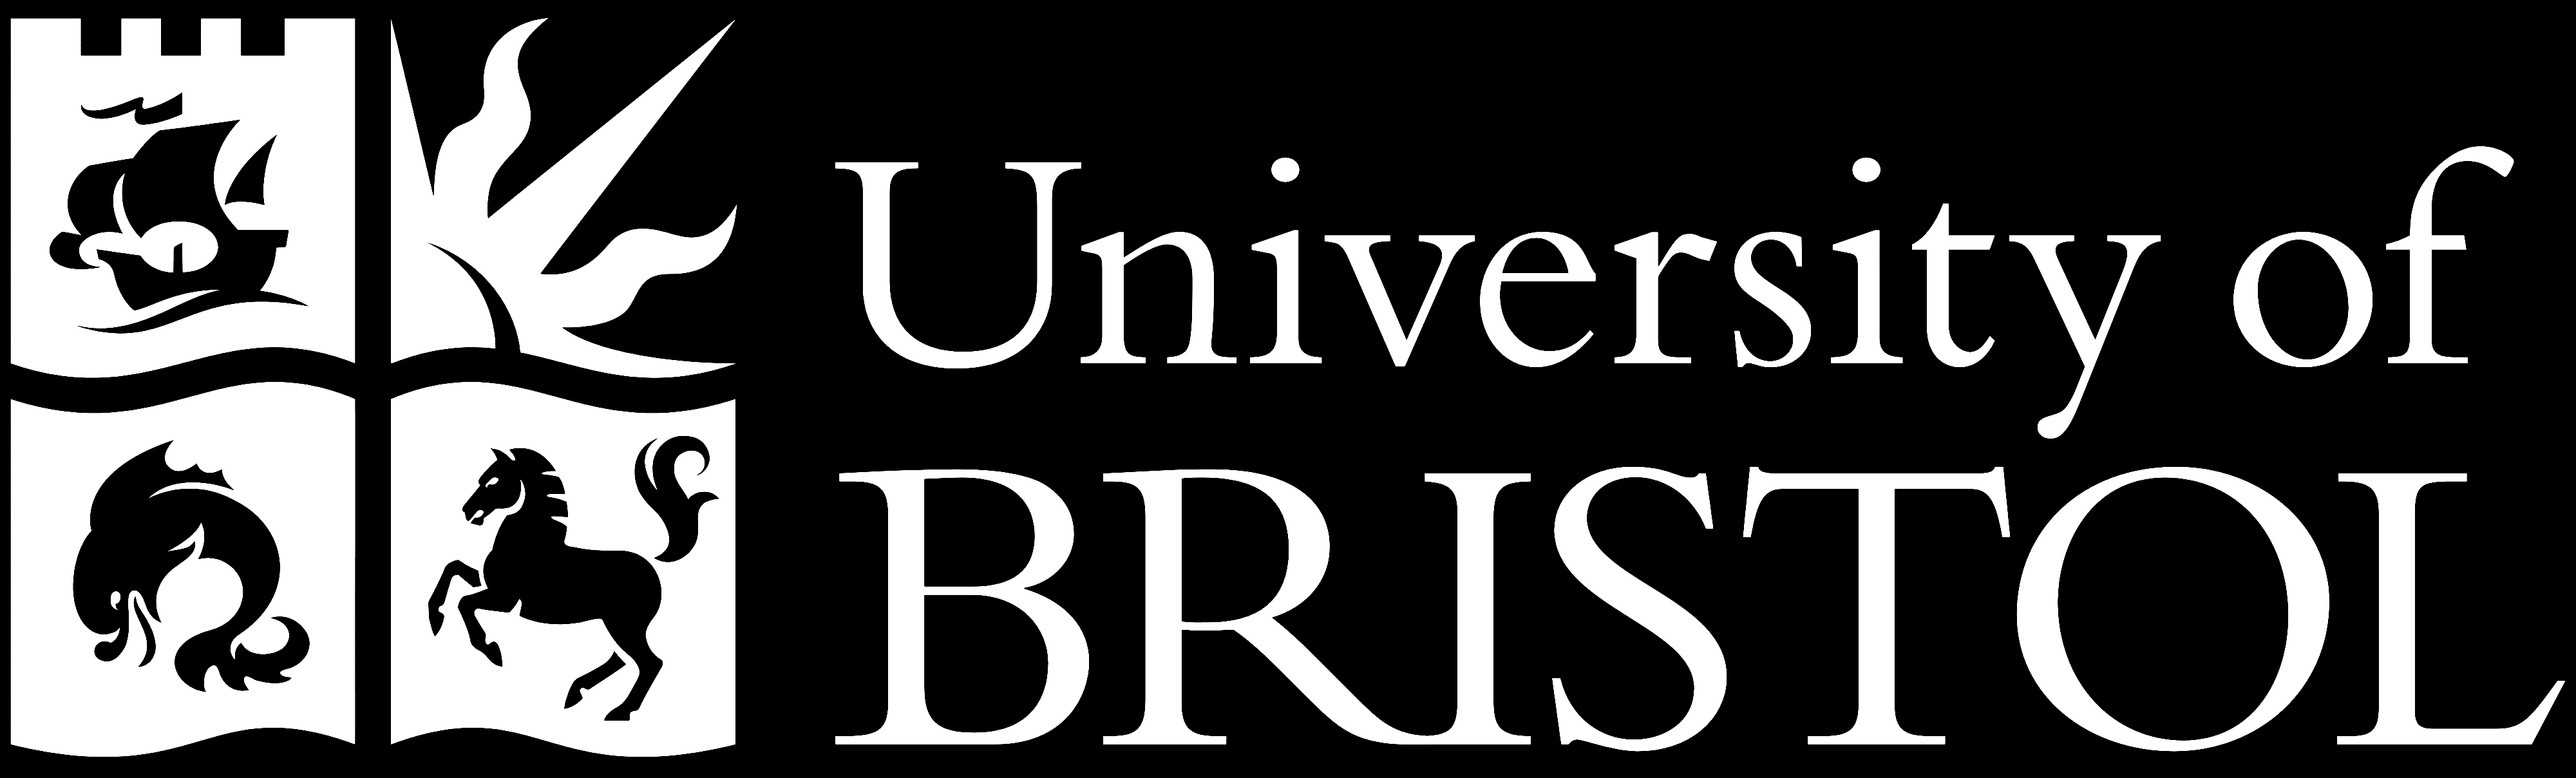 University_of_Bristol_logo_Inverted